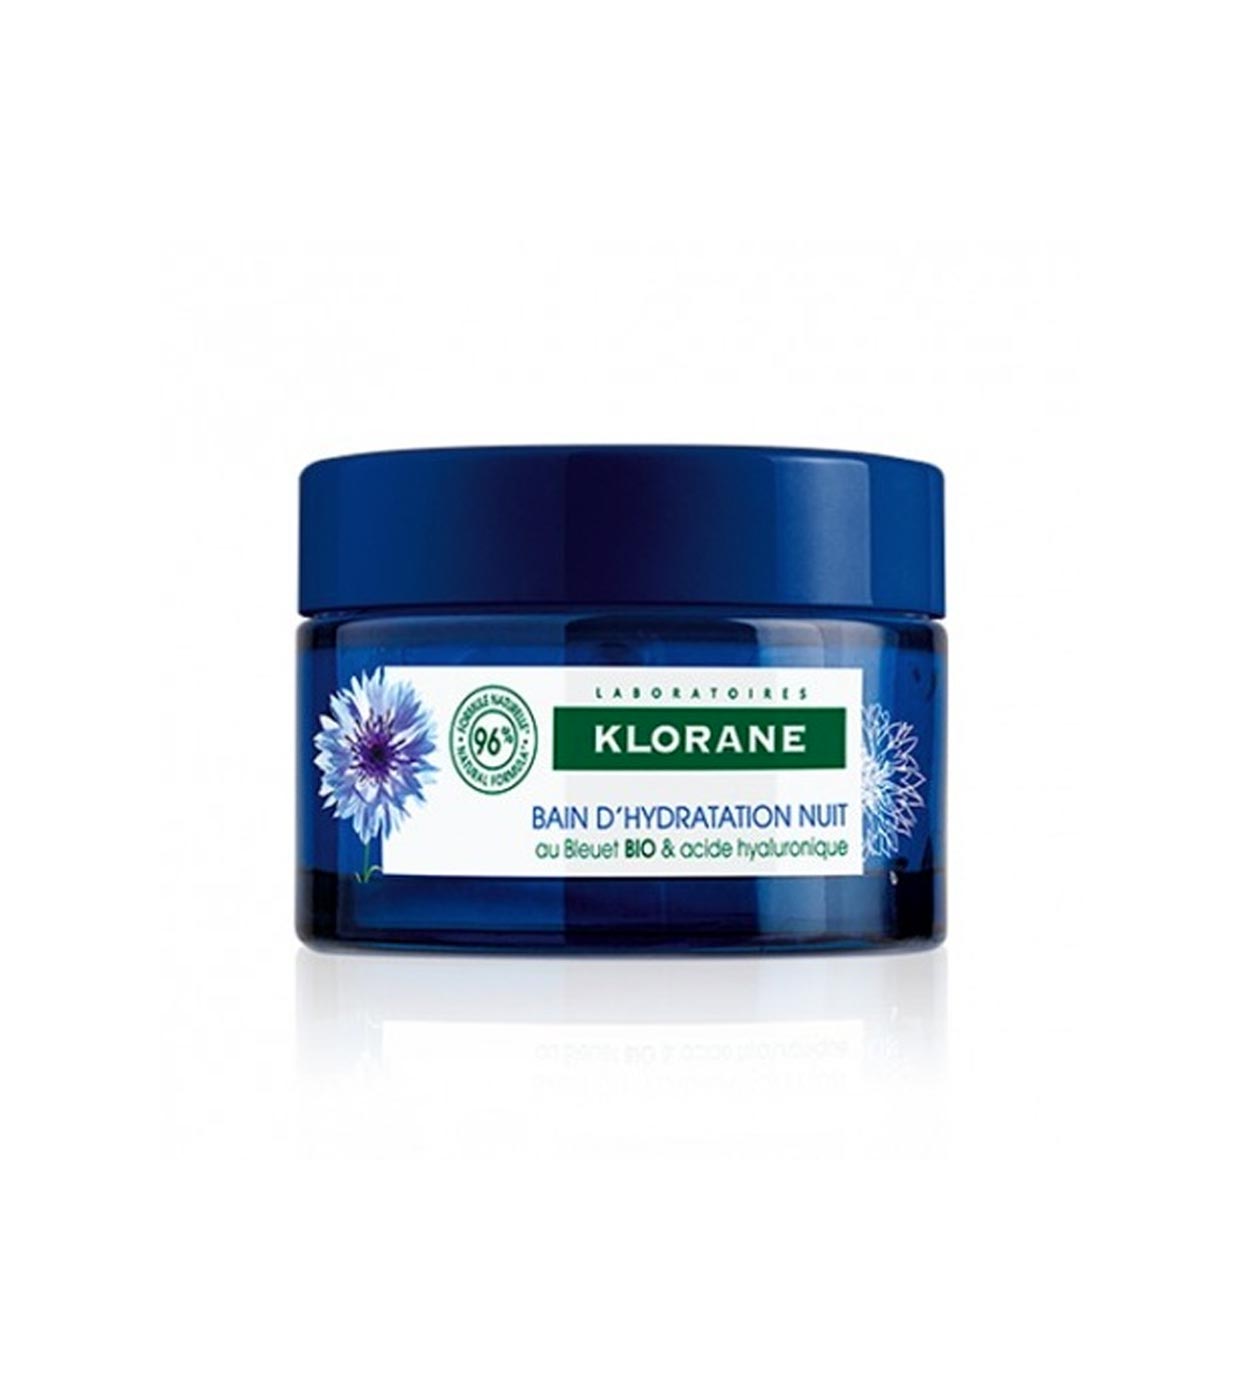 KLORANE Skin Care - Natural Skin Care Products